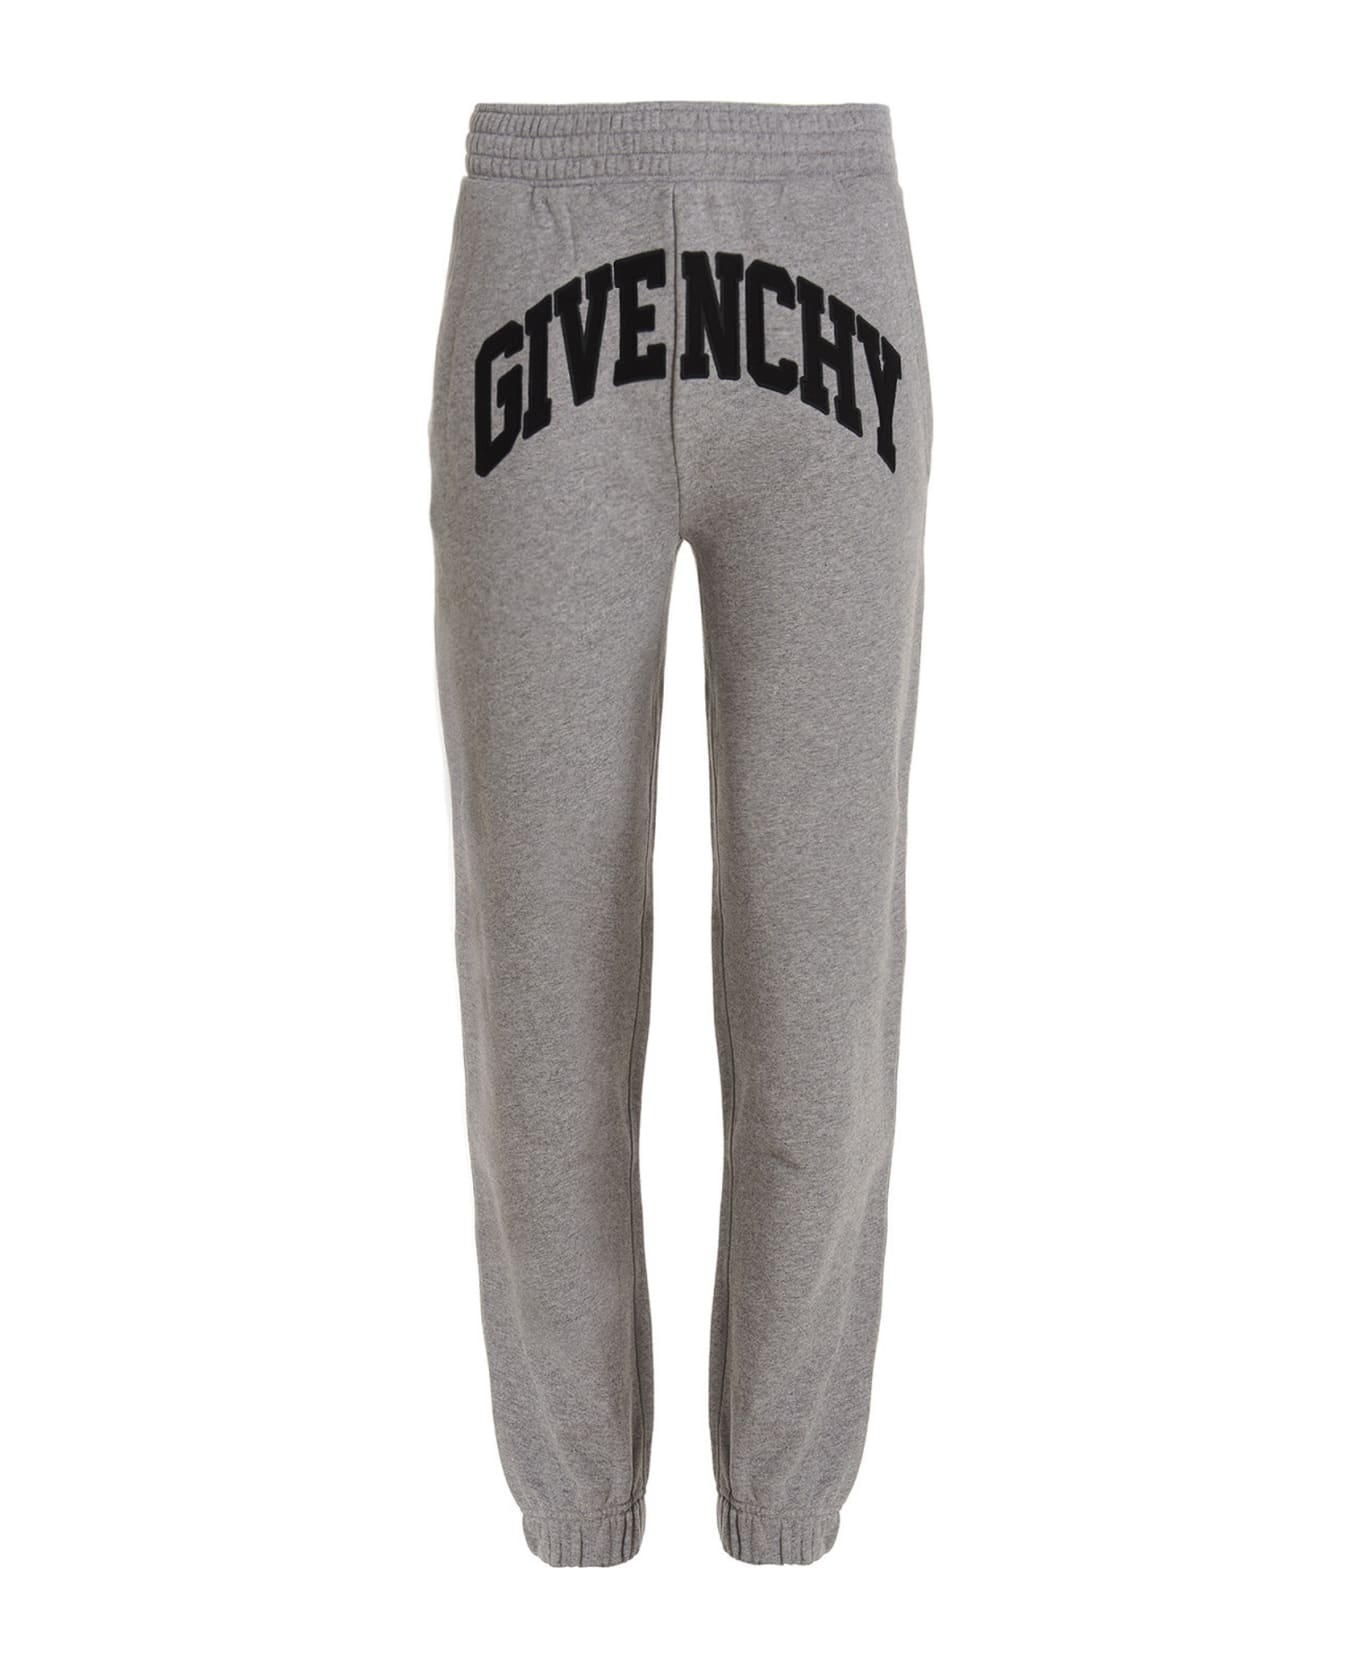 Givenchy Logo Embroidery Joggers - Grigio スウェットパンツ